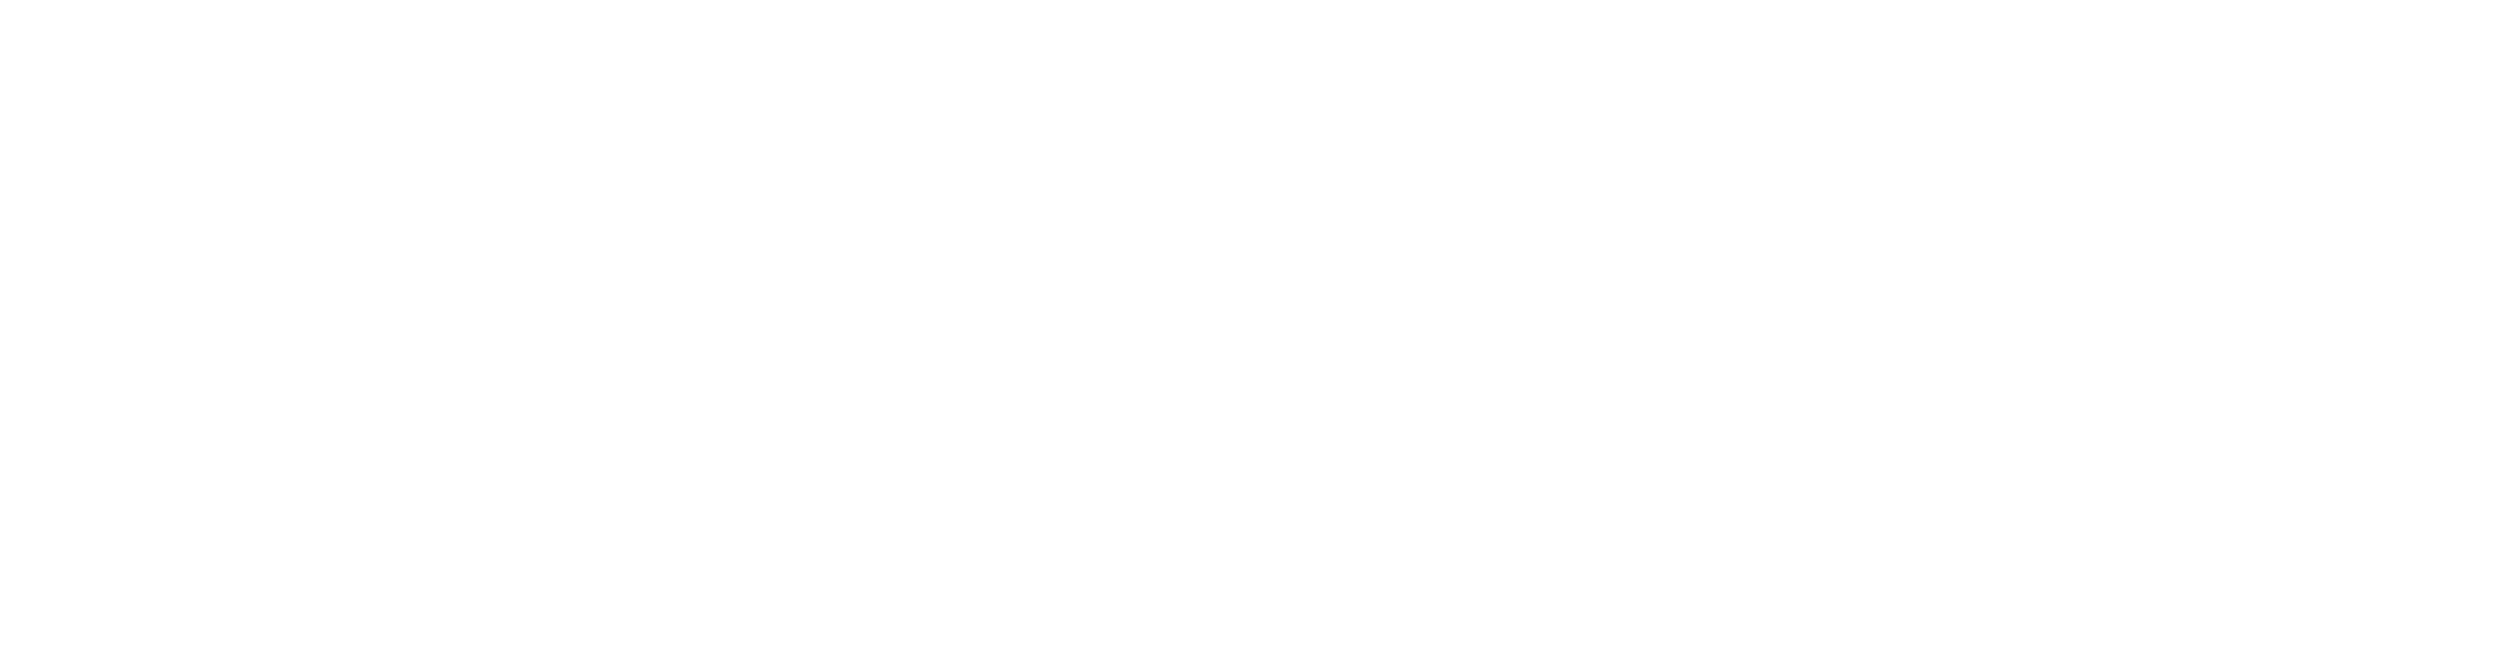 Caudalie-Logo.png